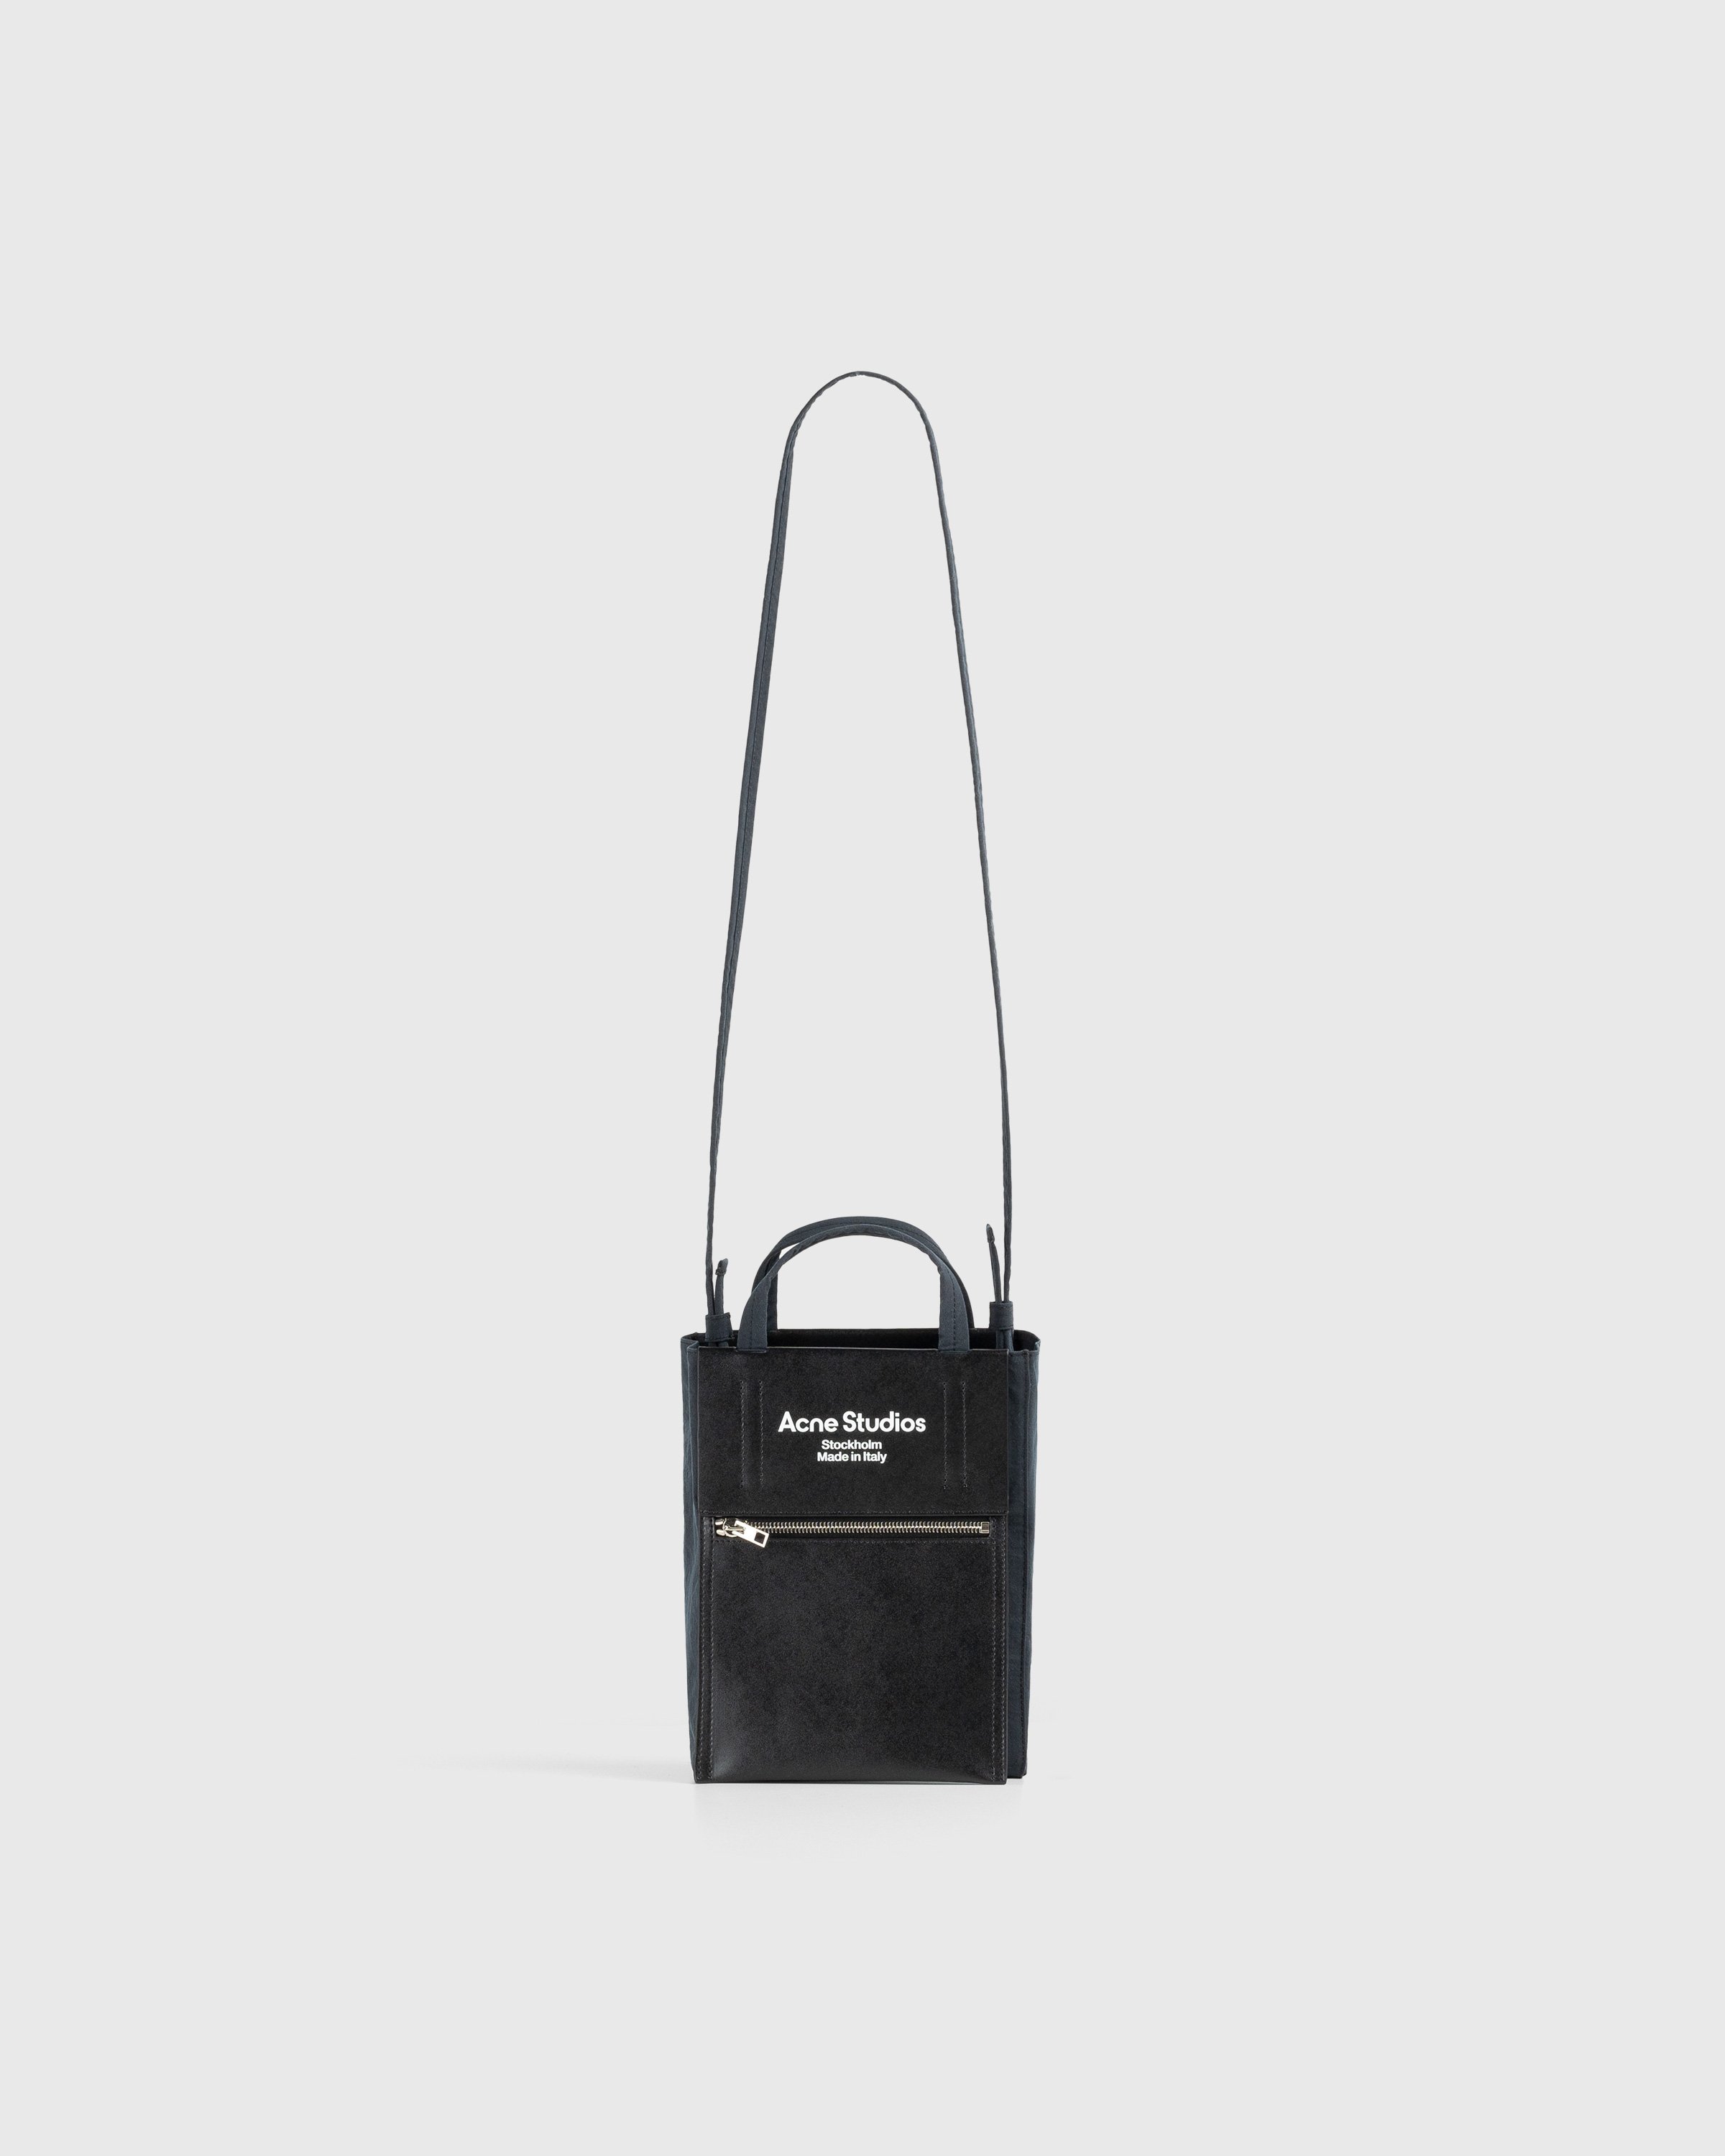 Acne Studios - Papery Nylon Tote Bag Black - Accessories - Black - Image 1